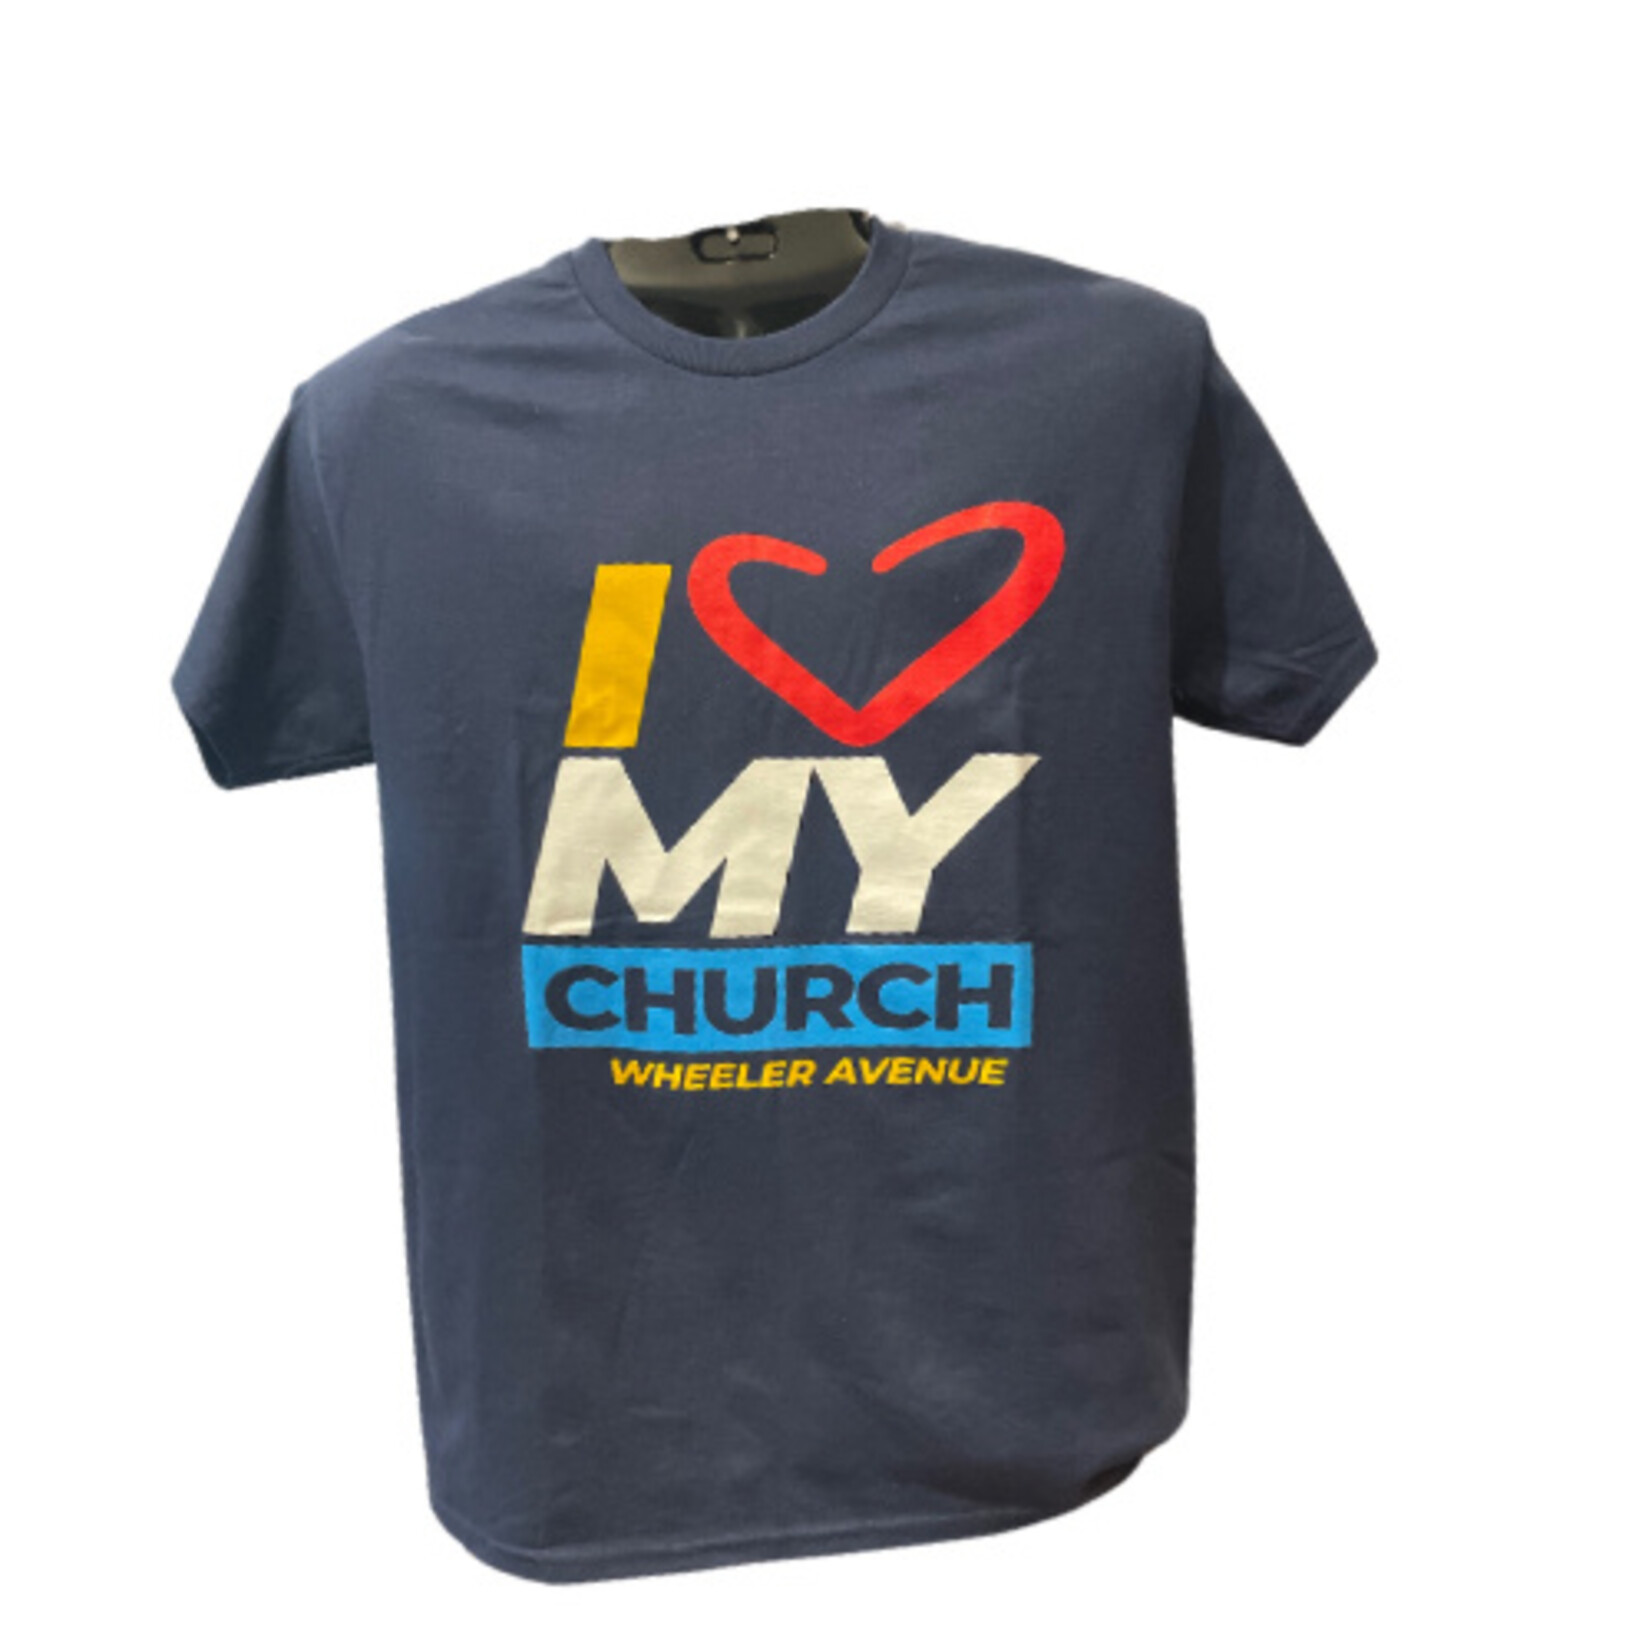 I LOVE MY CHURCH T-SHIRT